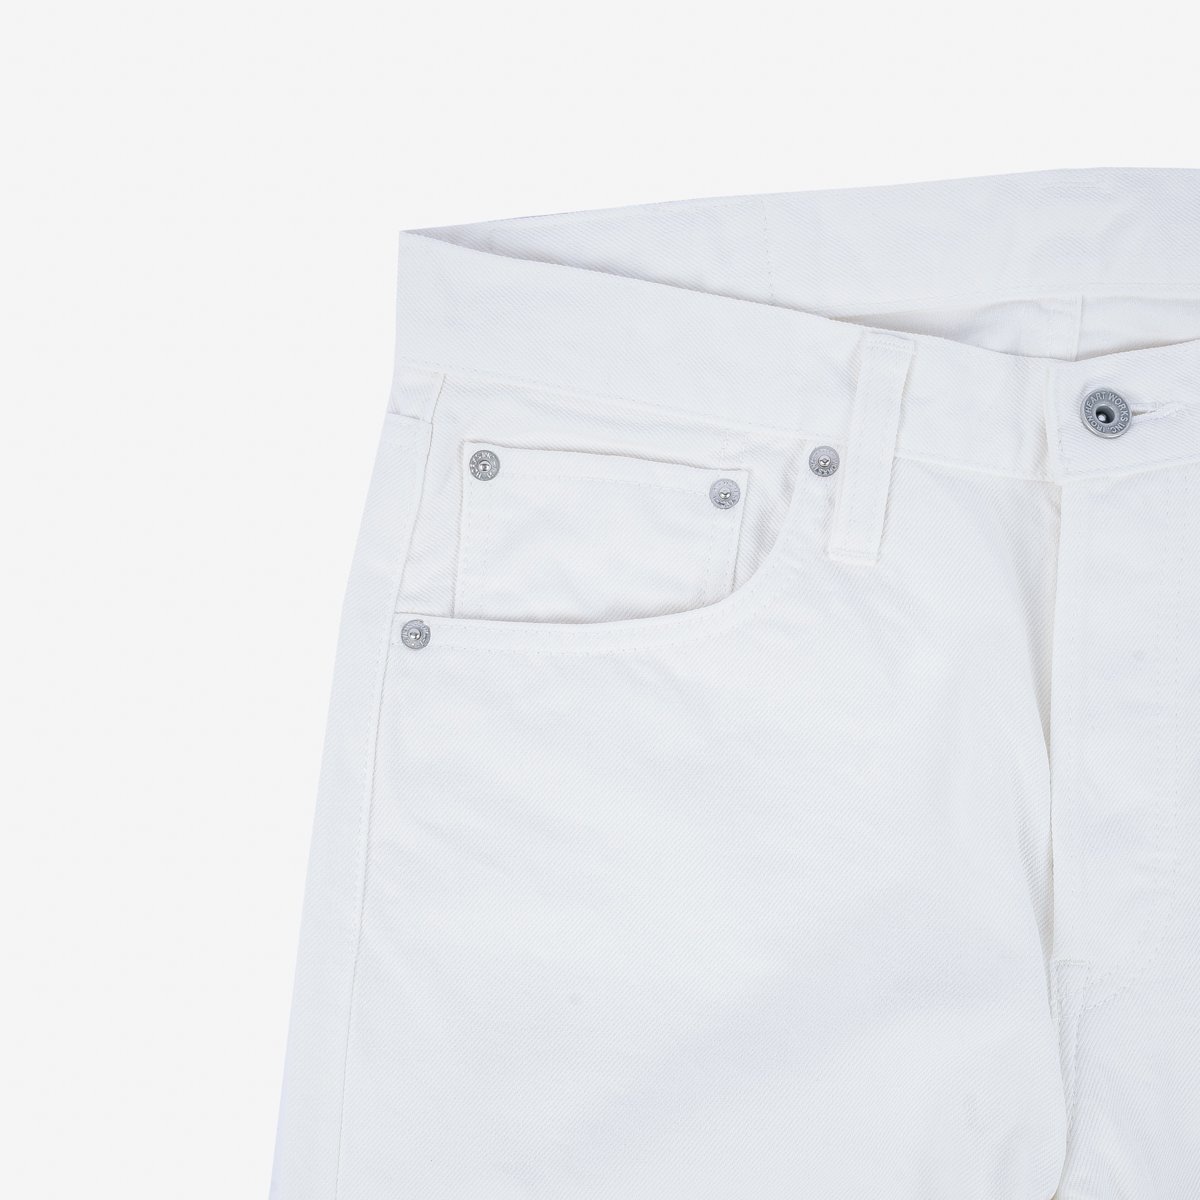 IH-666-WT 13.5oz Denim Slim Straight Cut Jeans - White - 5